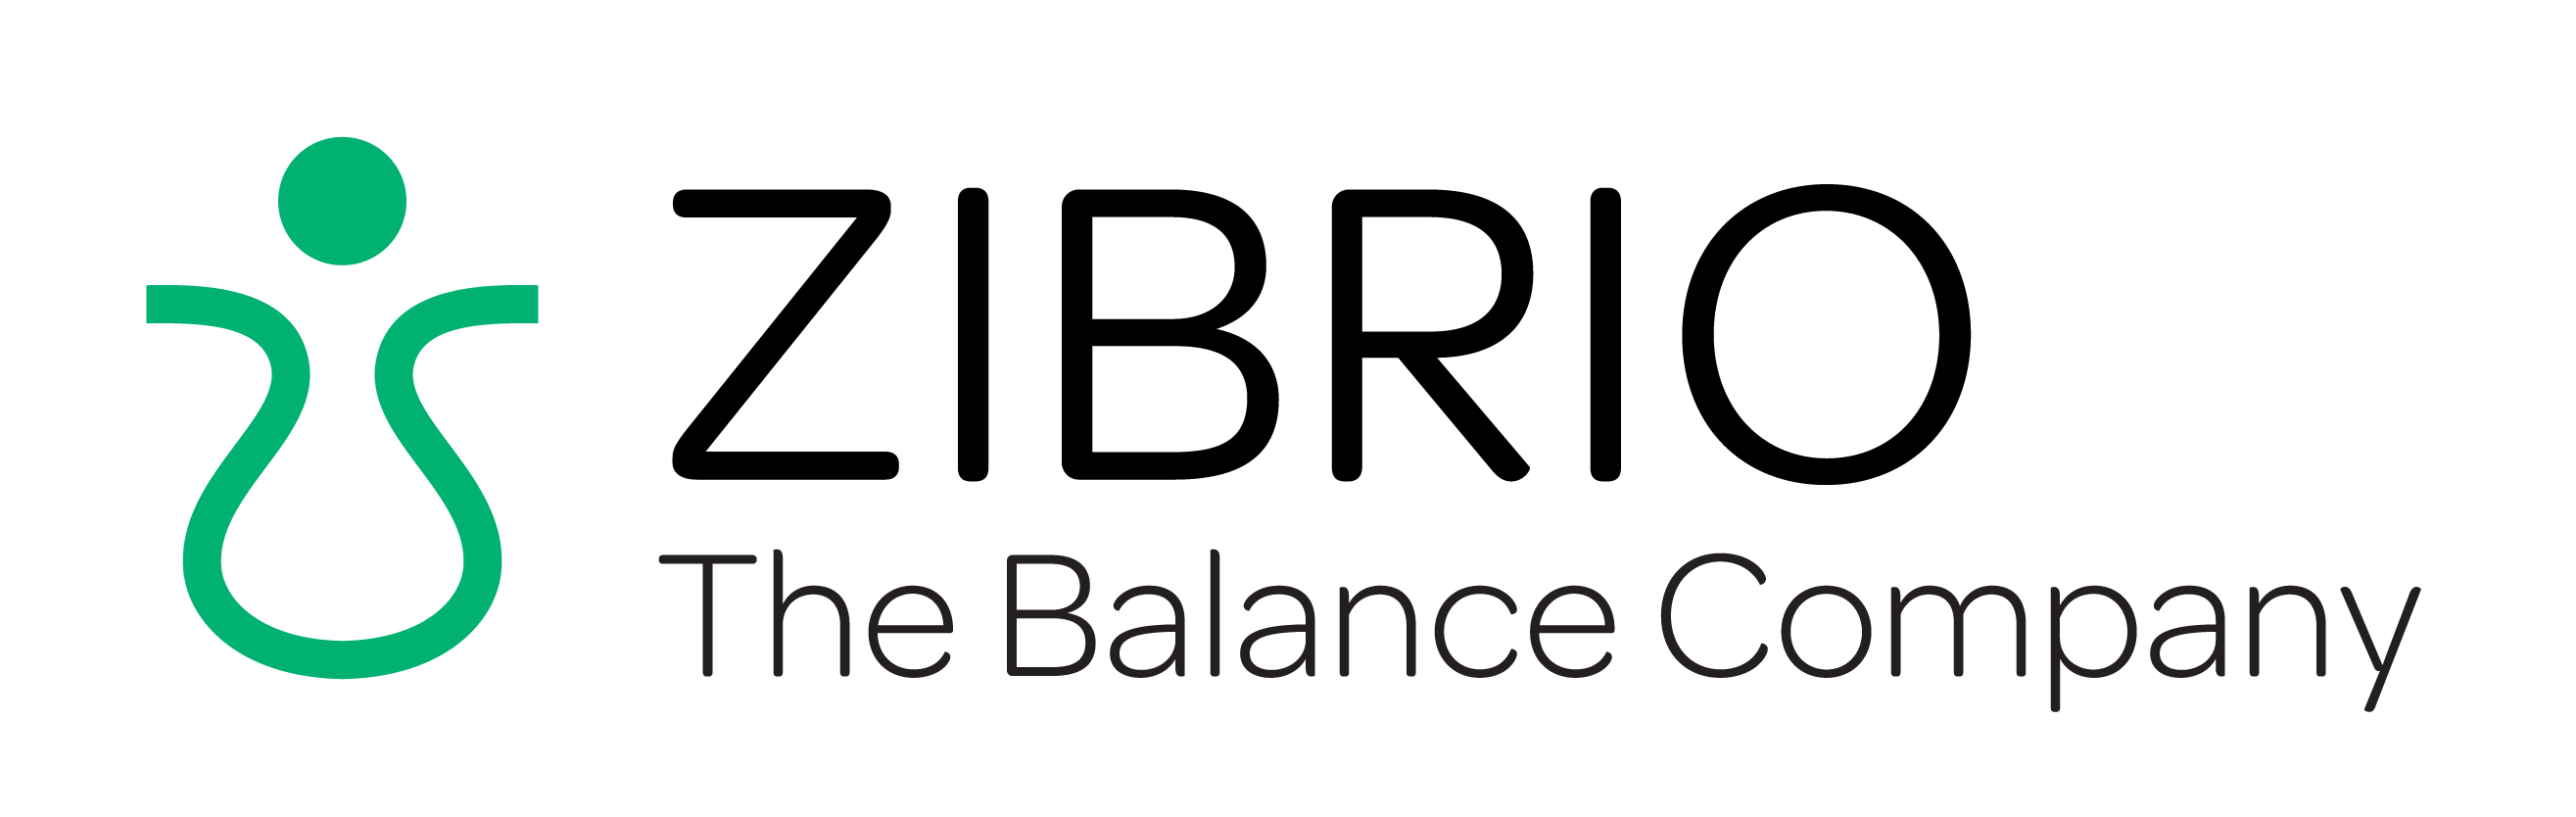 Zibro — the Balance Company